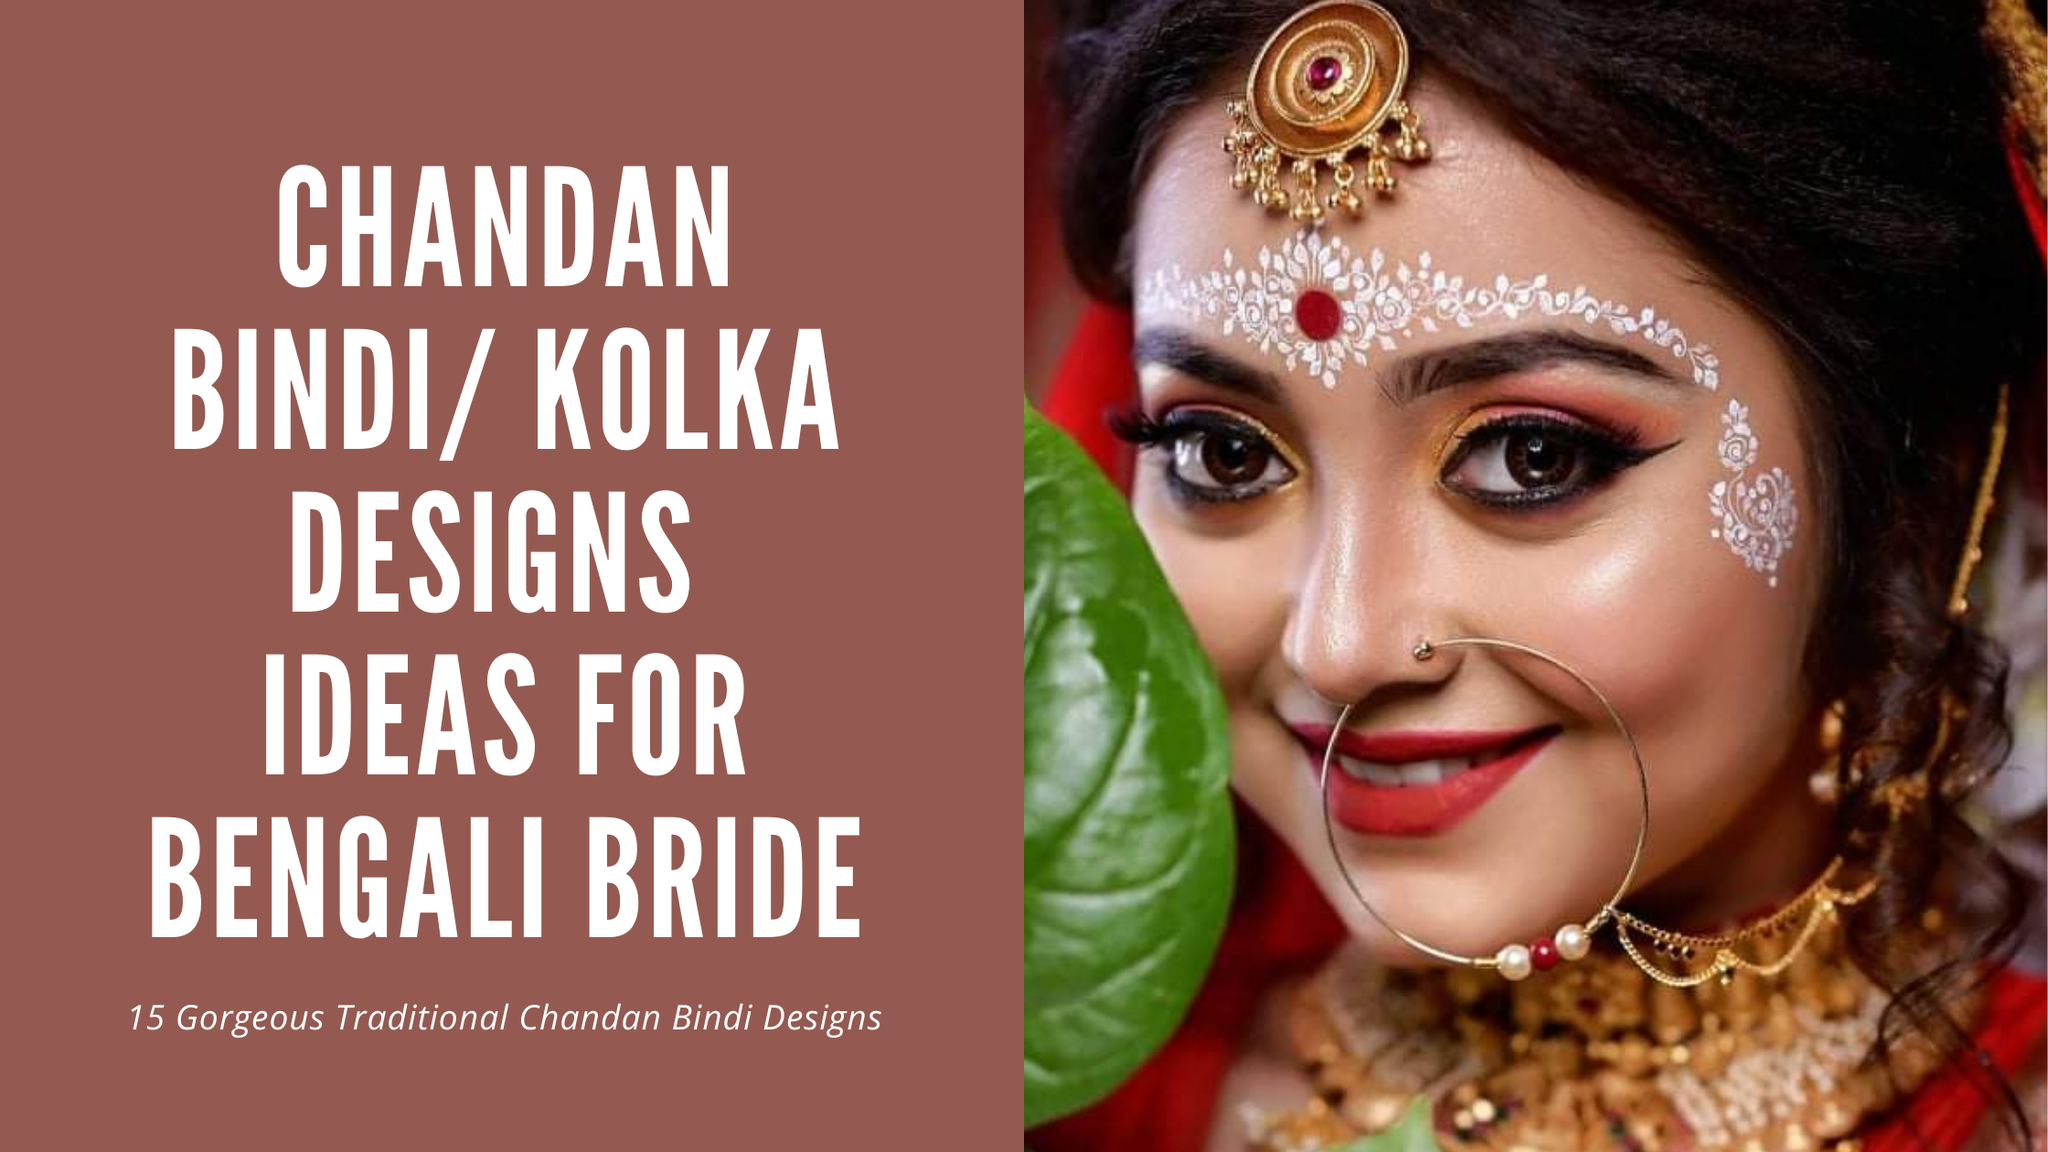 15 Traditional Chandan Bindi / Kolka Design Ideas For Bengali Bride - Tikli